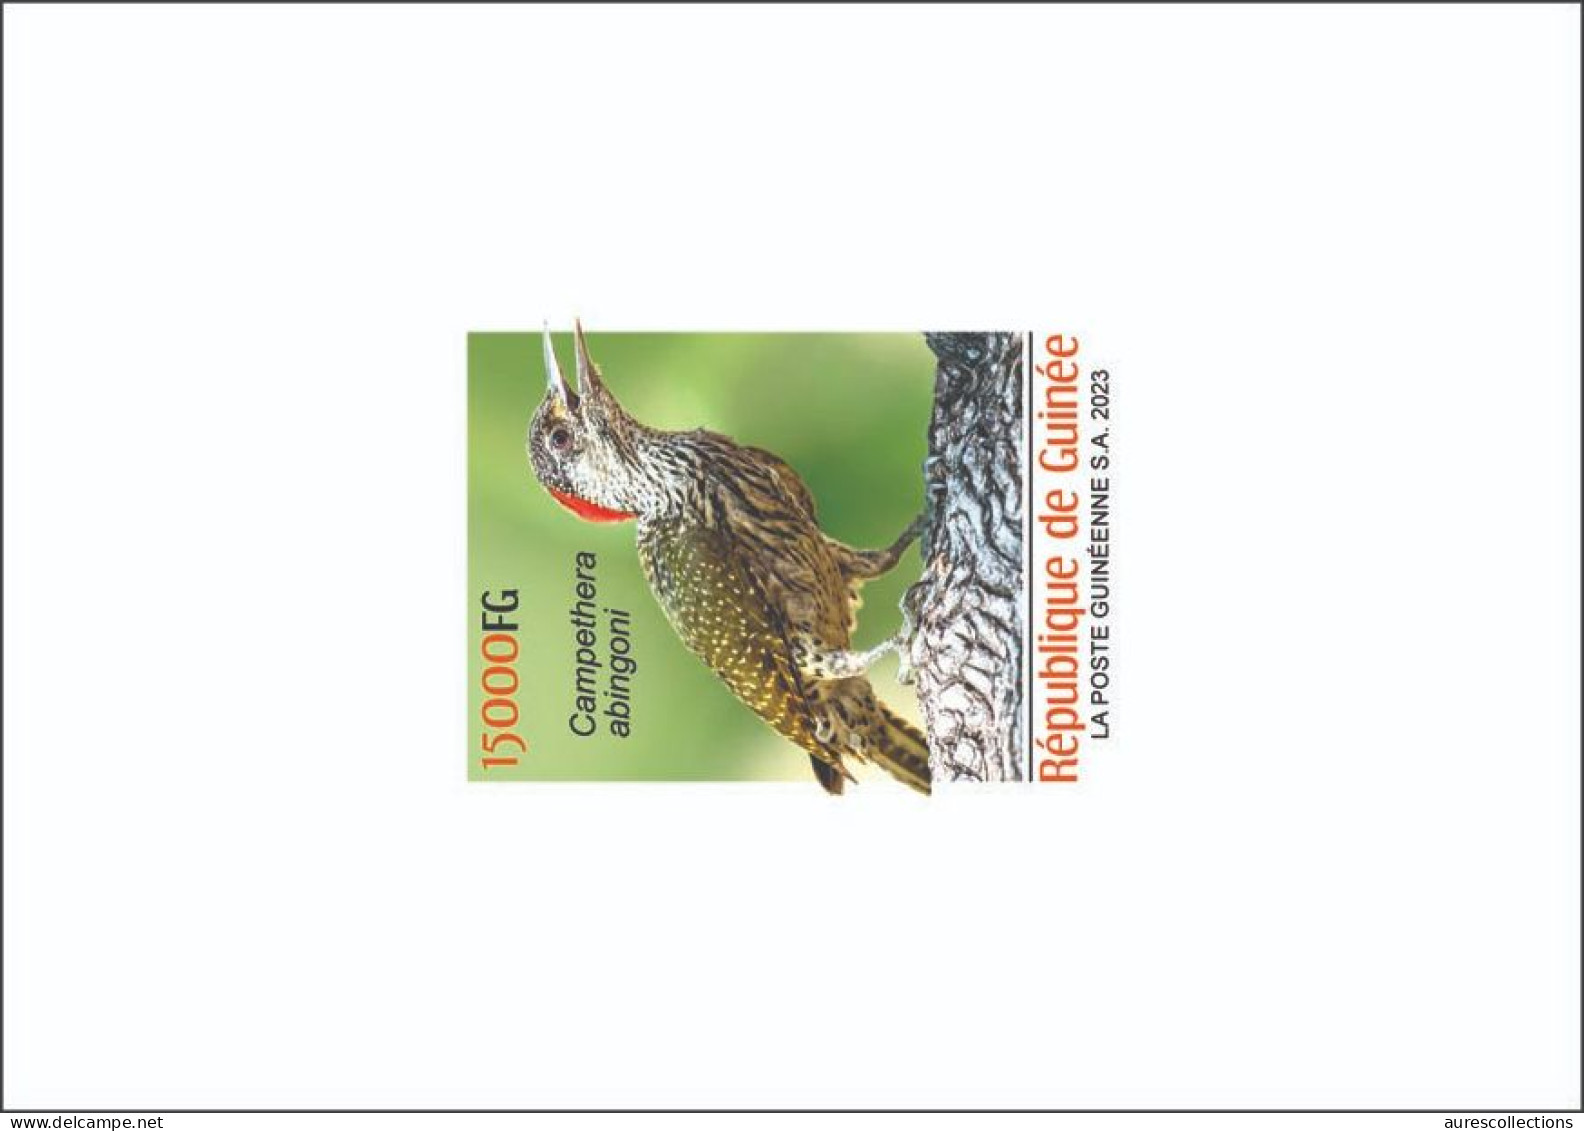 GUINEA 2023 DELUXE PROOF - BIRDS OISEAUX - WOODPECKER PIC - Spechten En Klimvogels